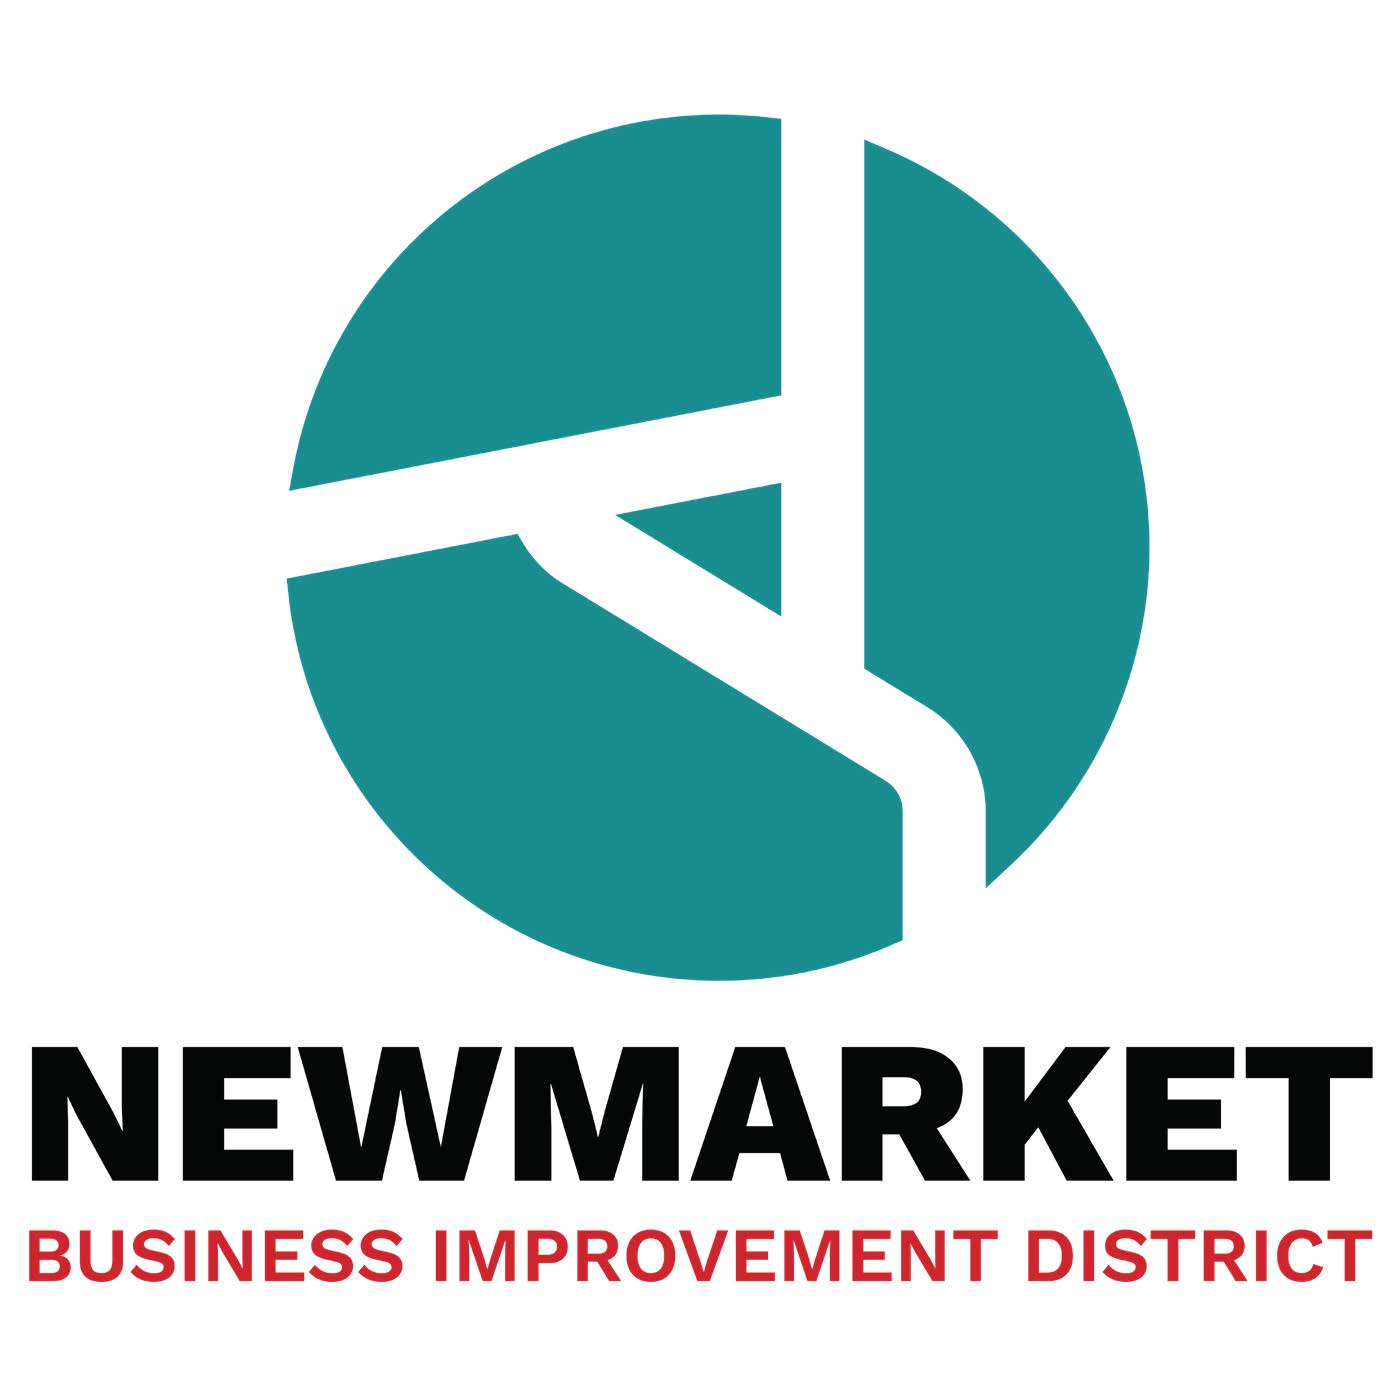 Newmarket Business Improvement District